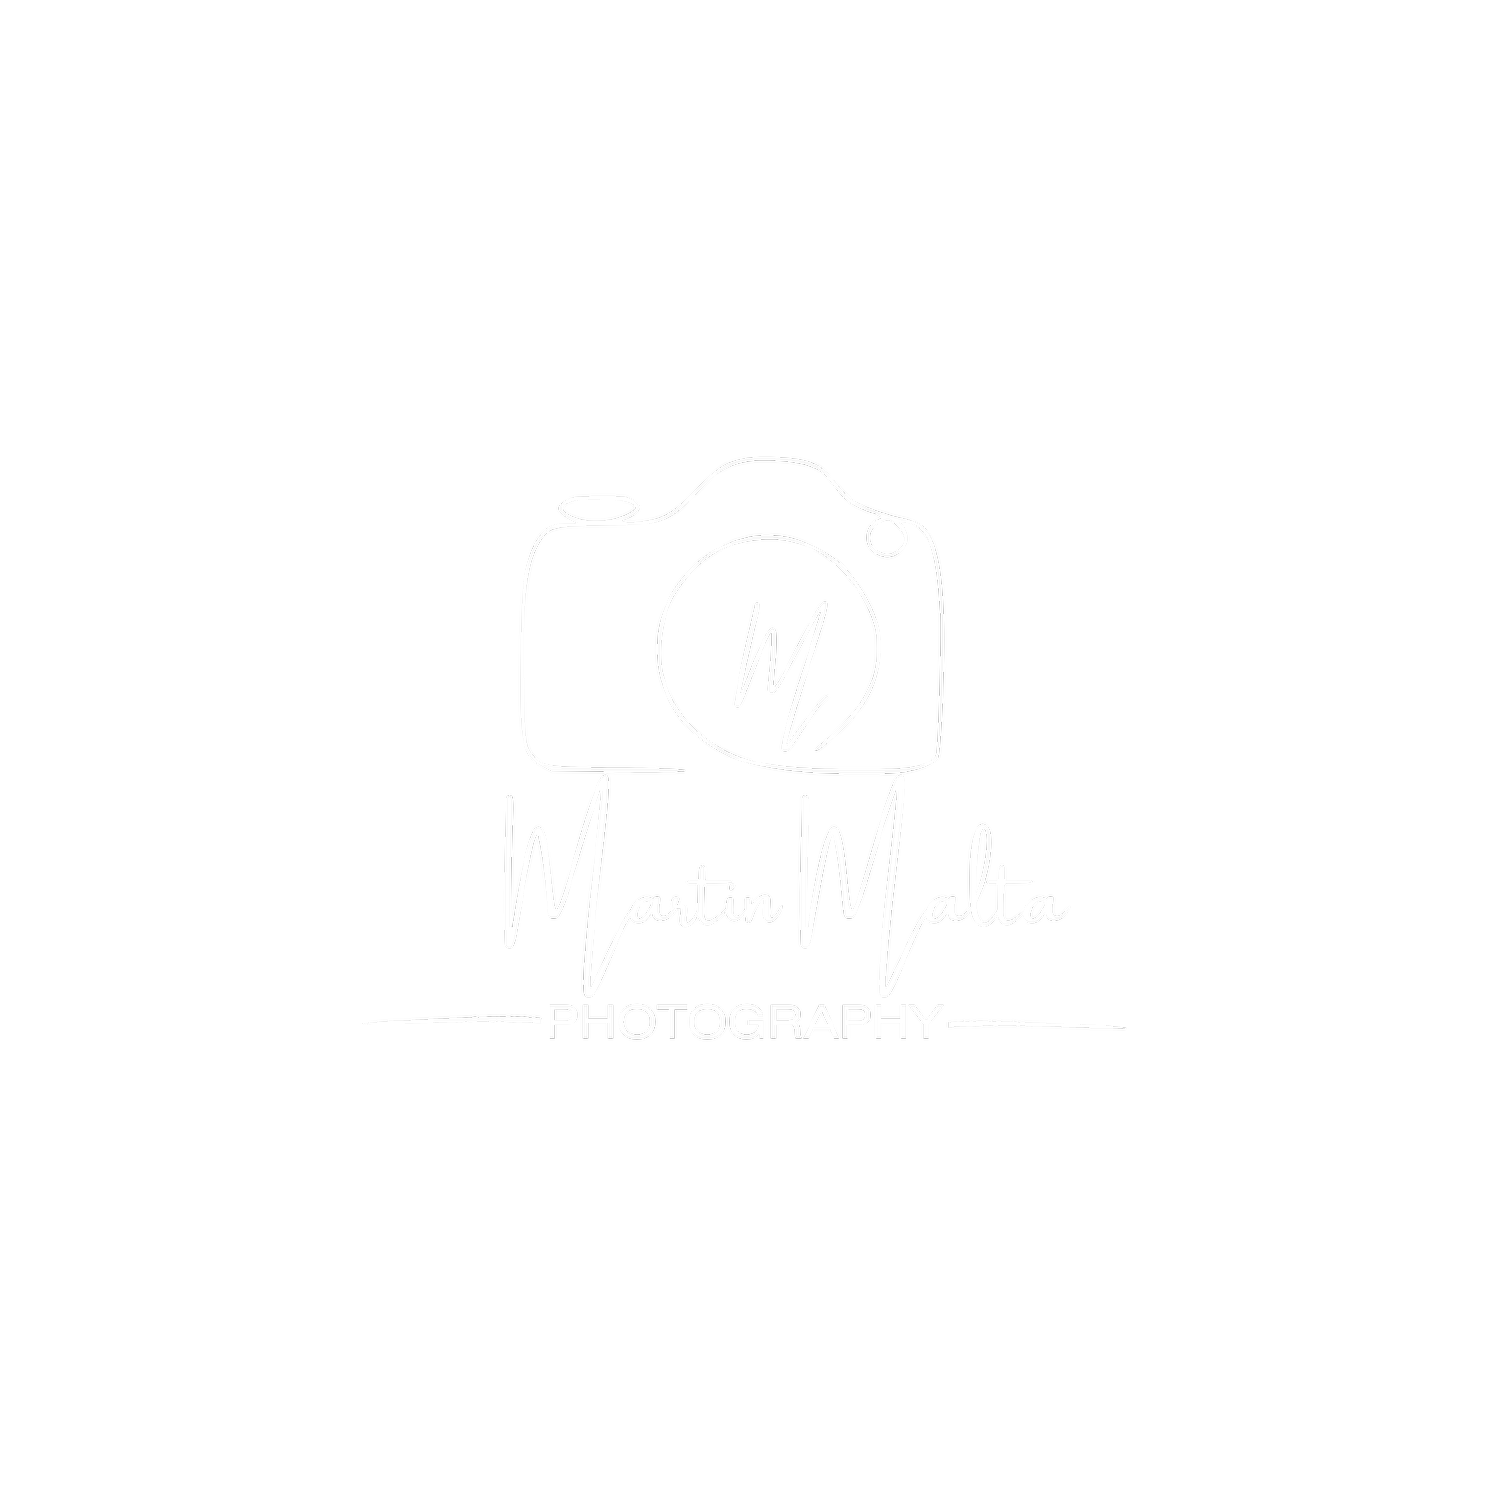 Martin Malta Photography